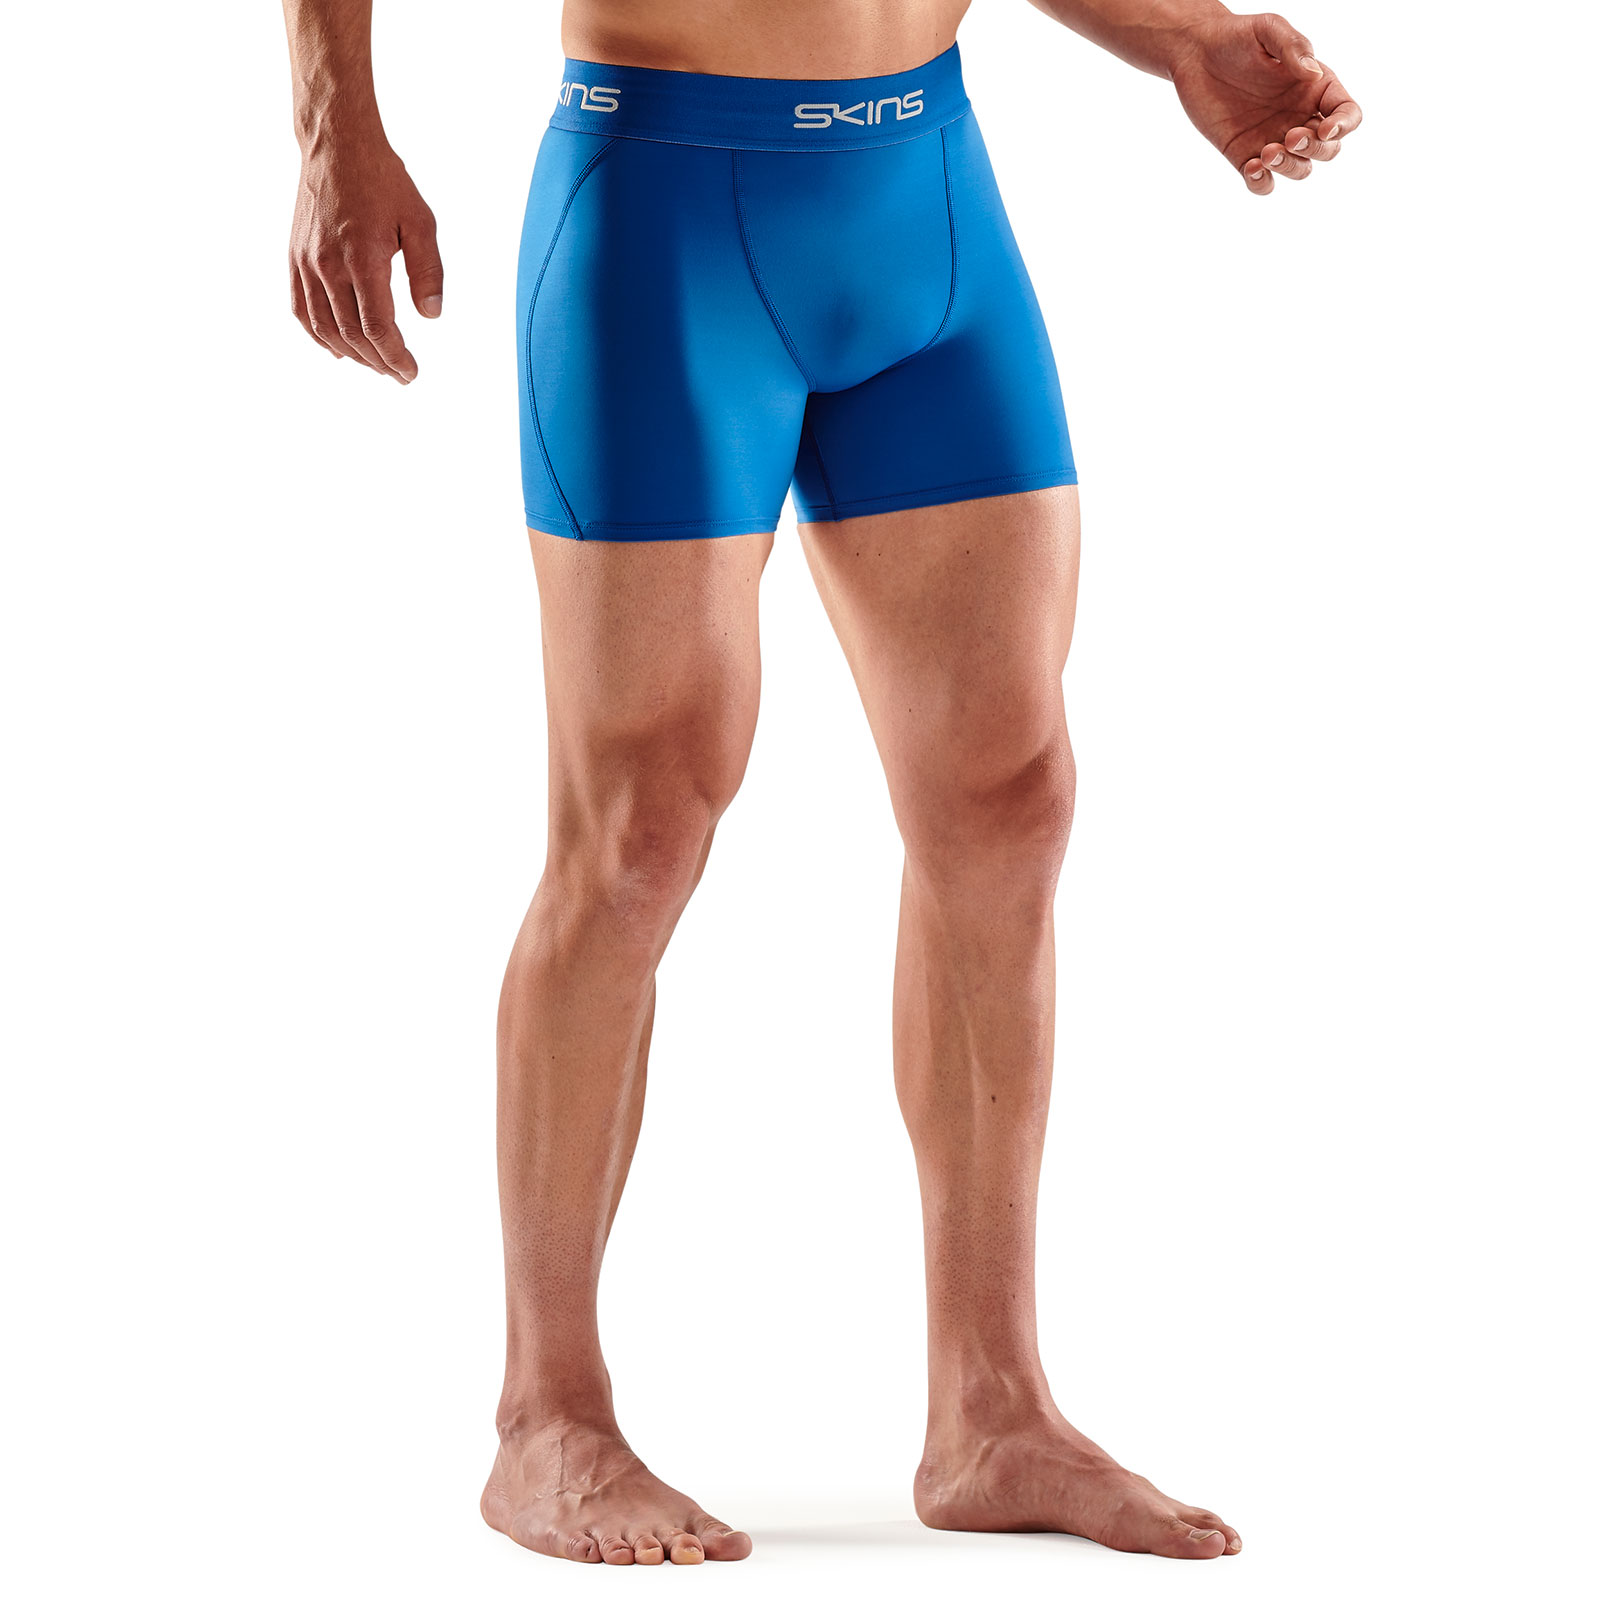 Skins Series-1 Mens Compression Half Tights (Bright Blue), GREAT BARGAIN